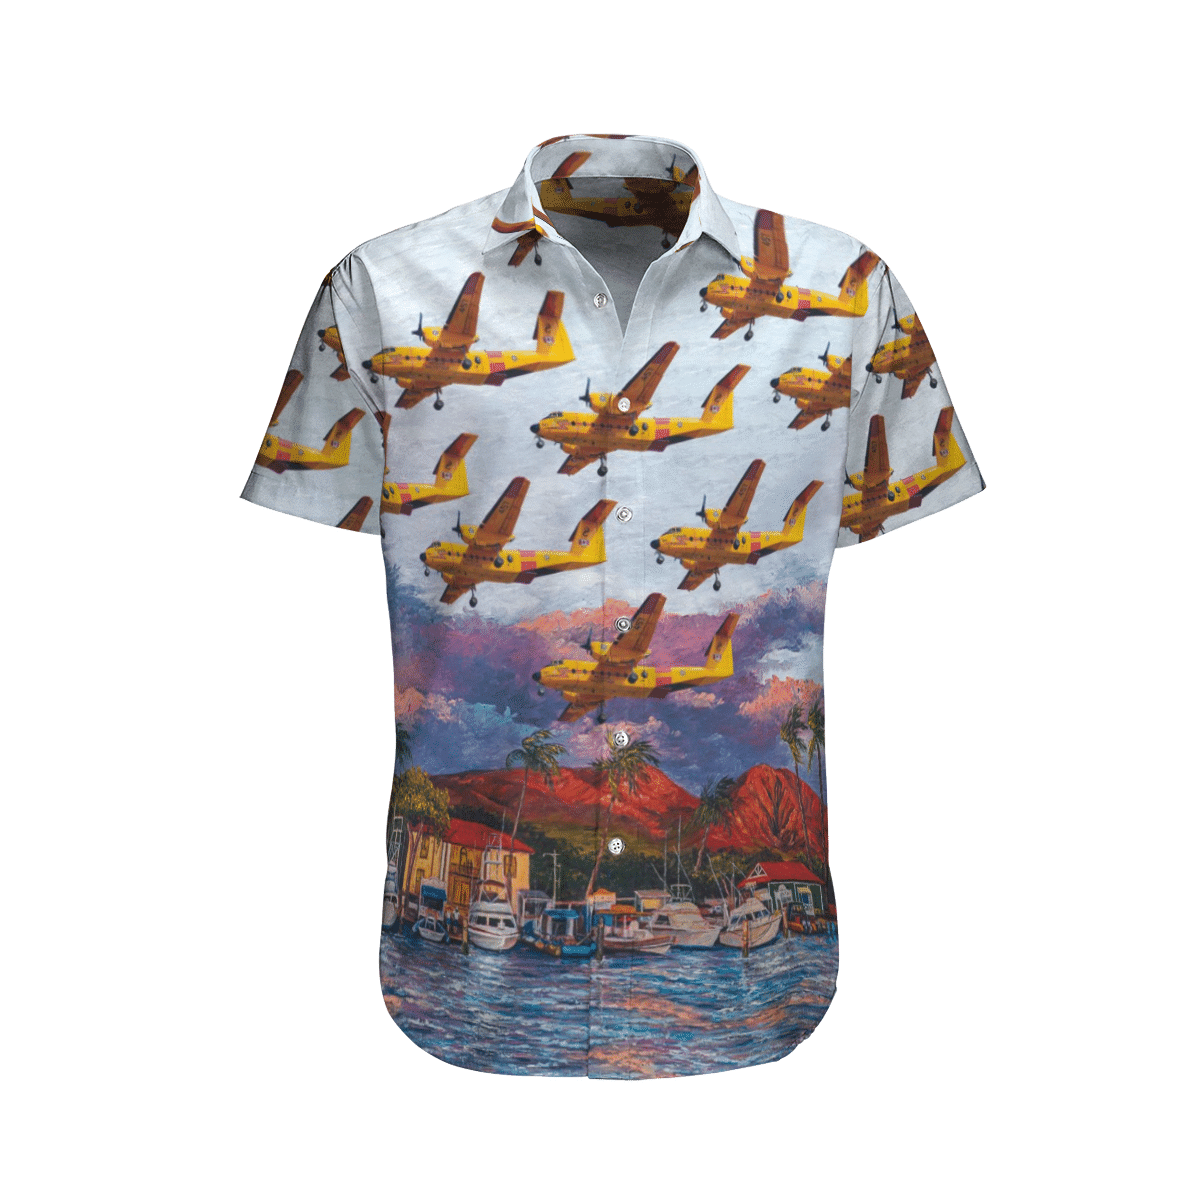 Get a new Hawaiian shirt to enjoy summer vacation 97